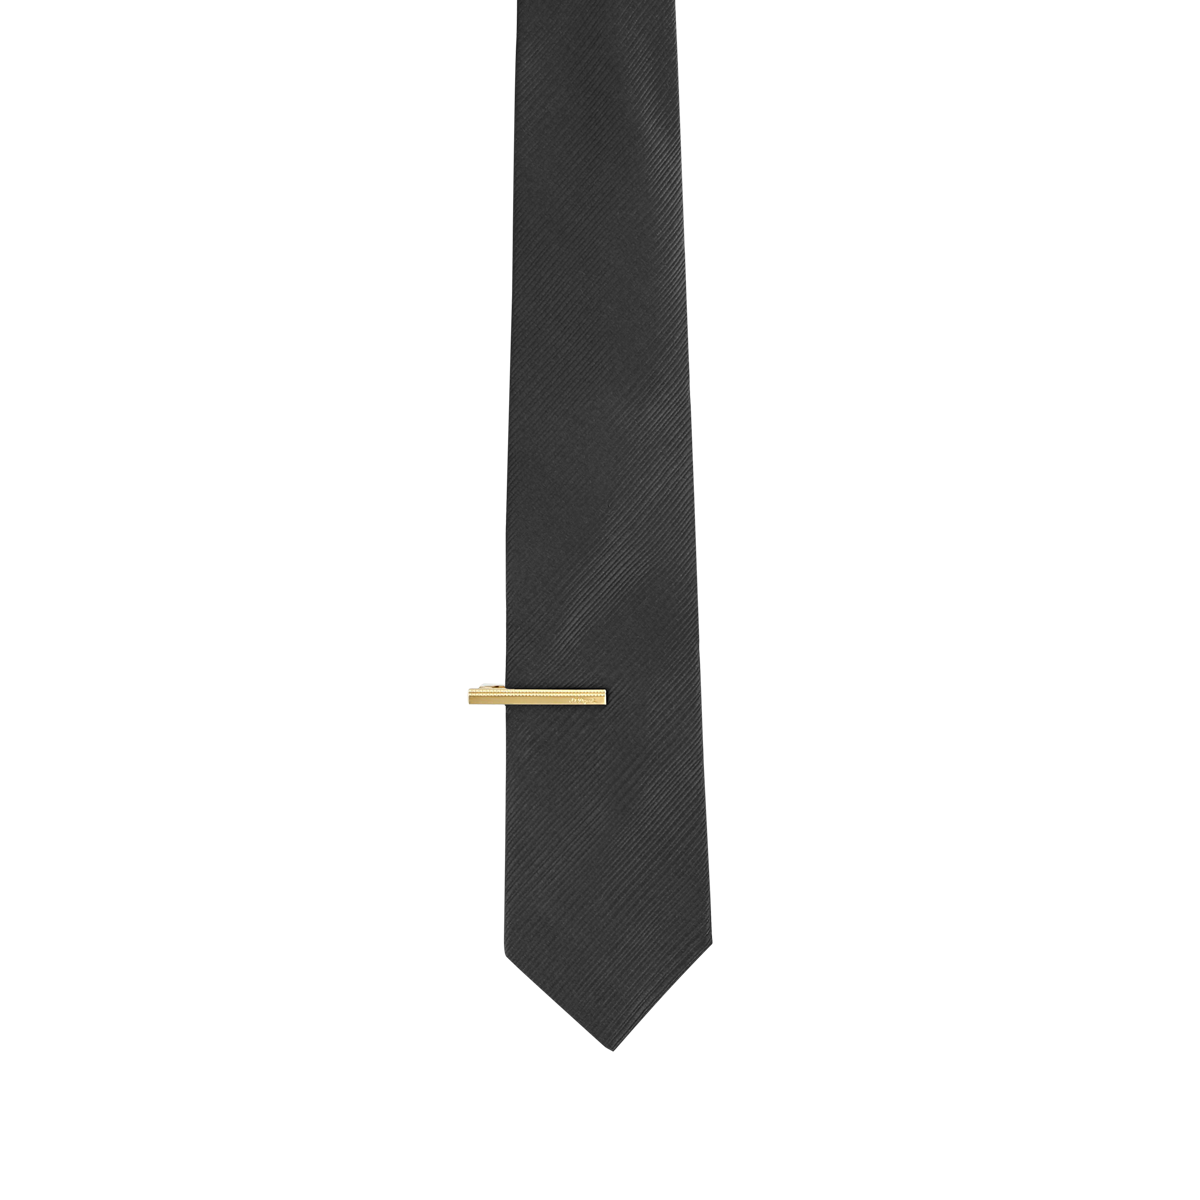 Заколка для галстука Classic 5839 Отделка позолотой